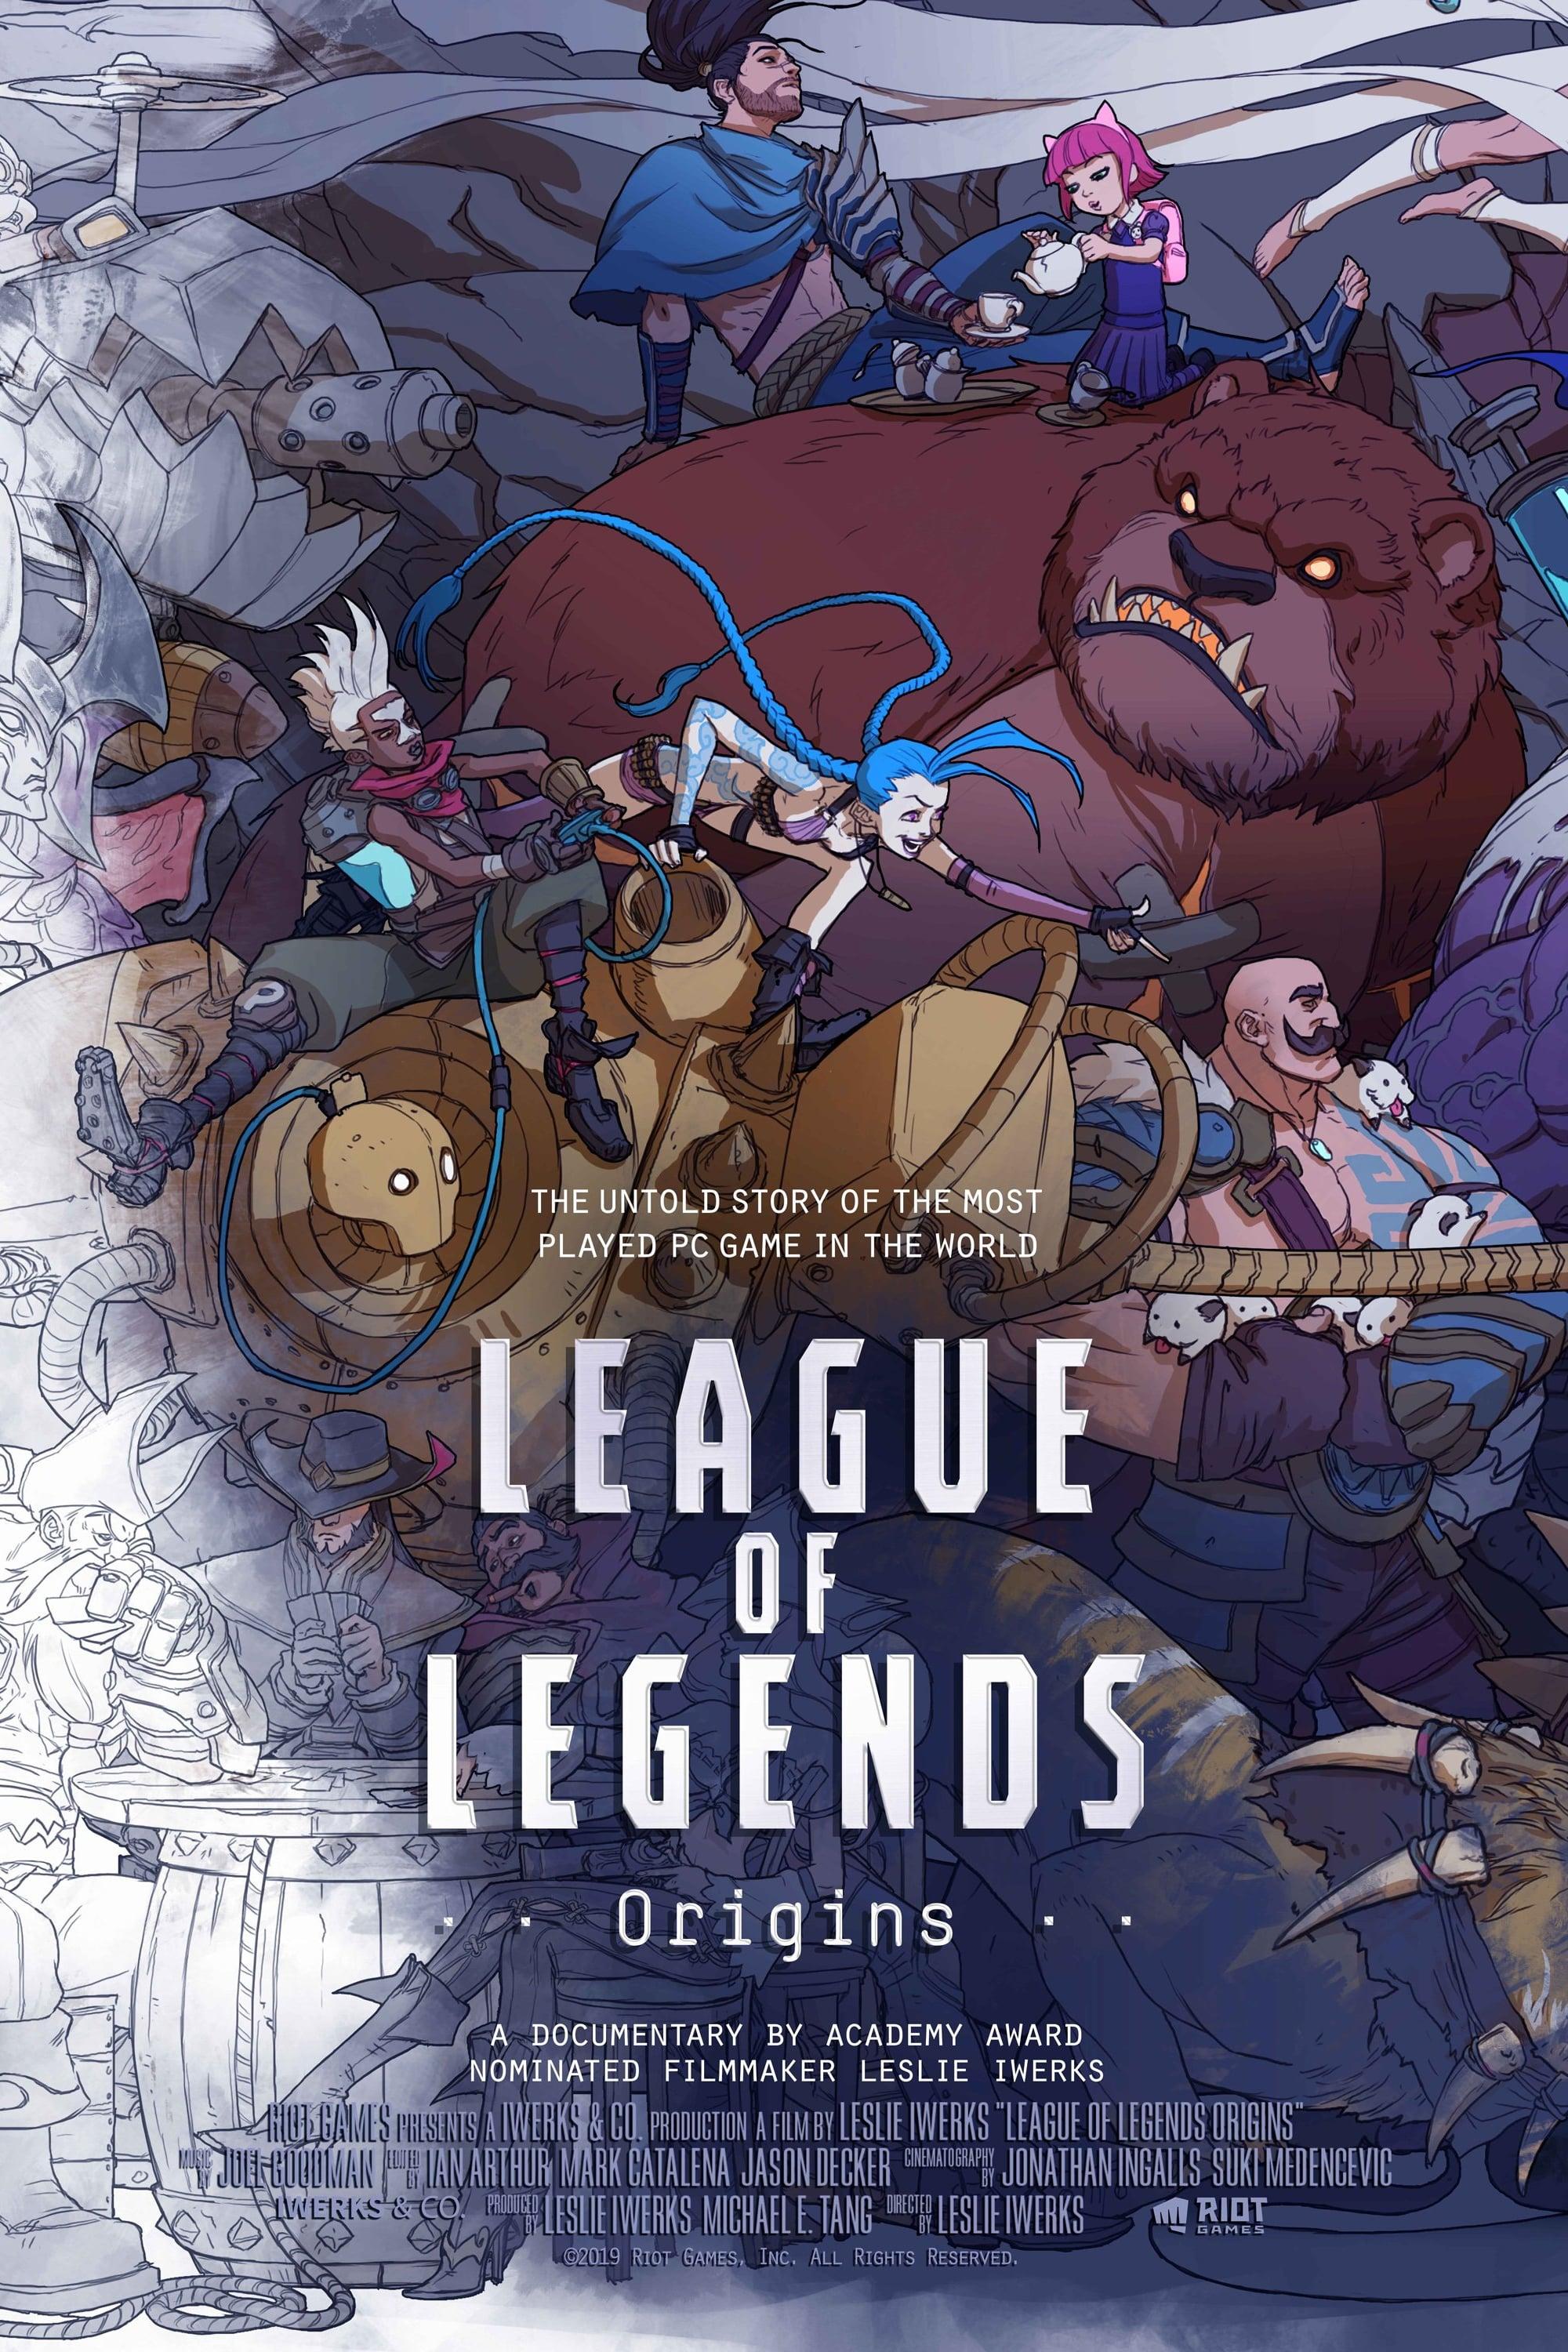 League of Legends: Origins poster